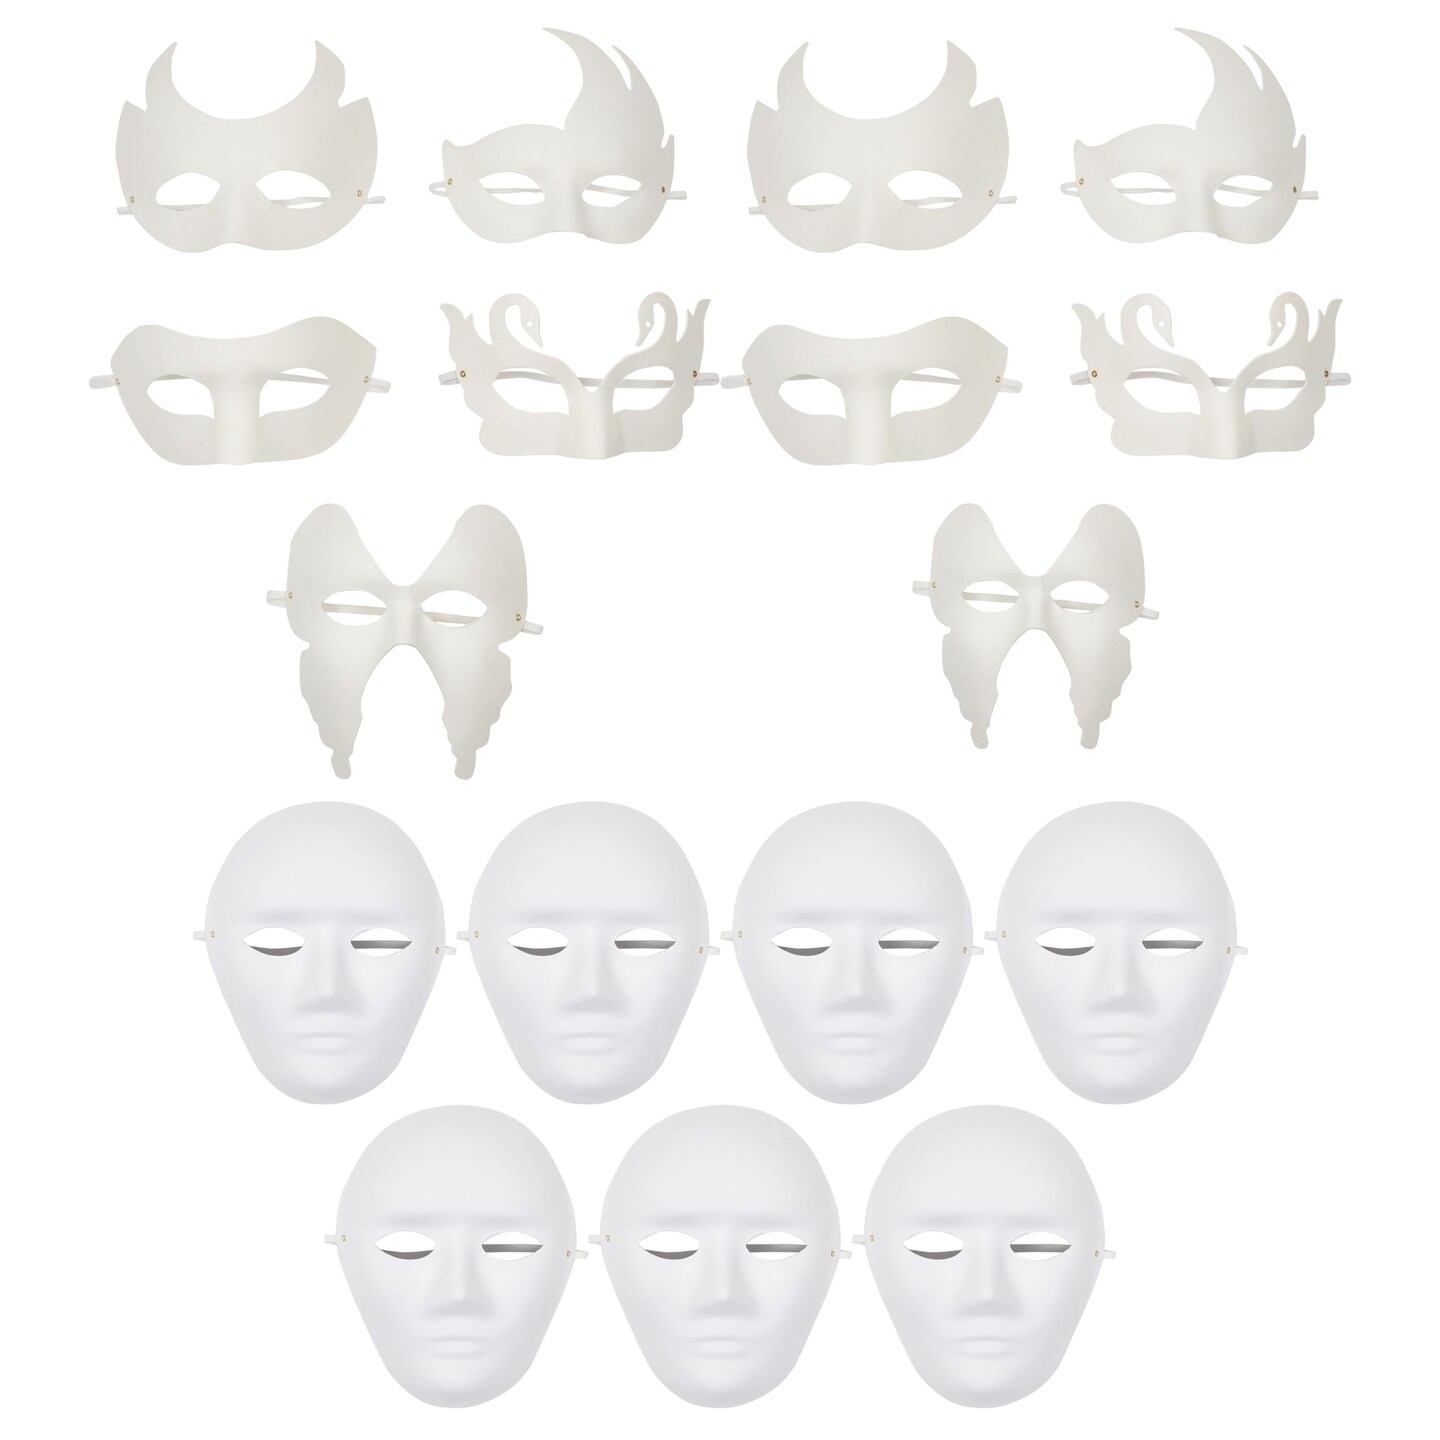 masquerade mask design template